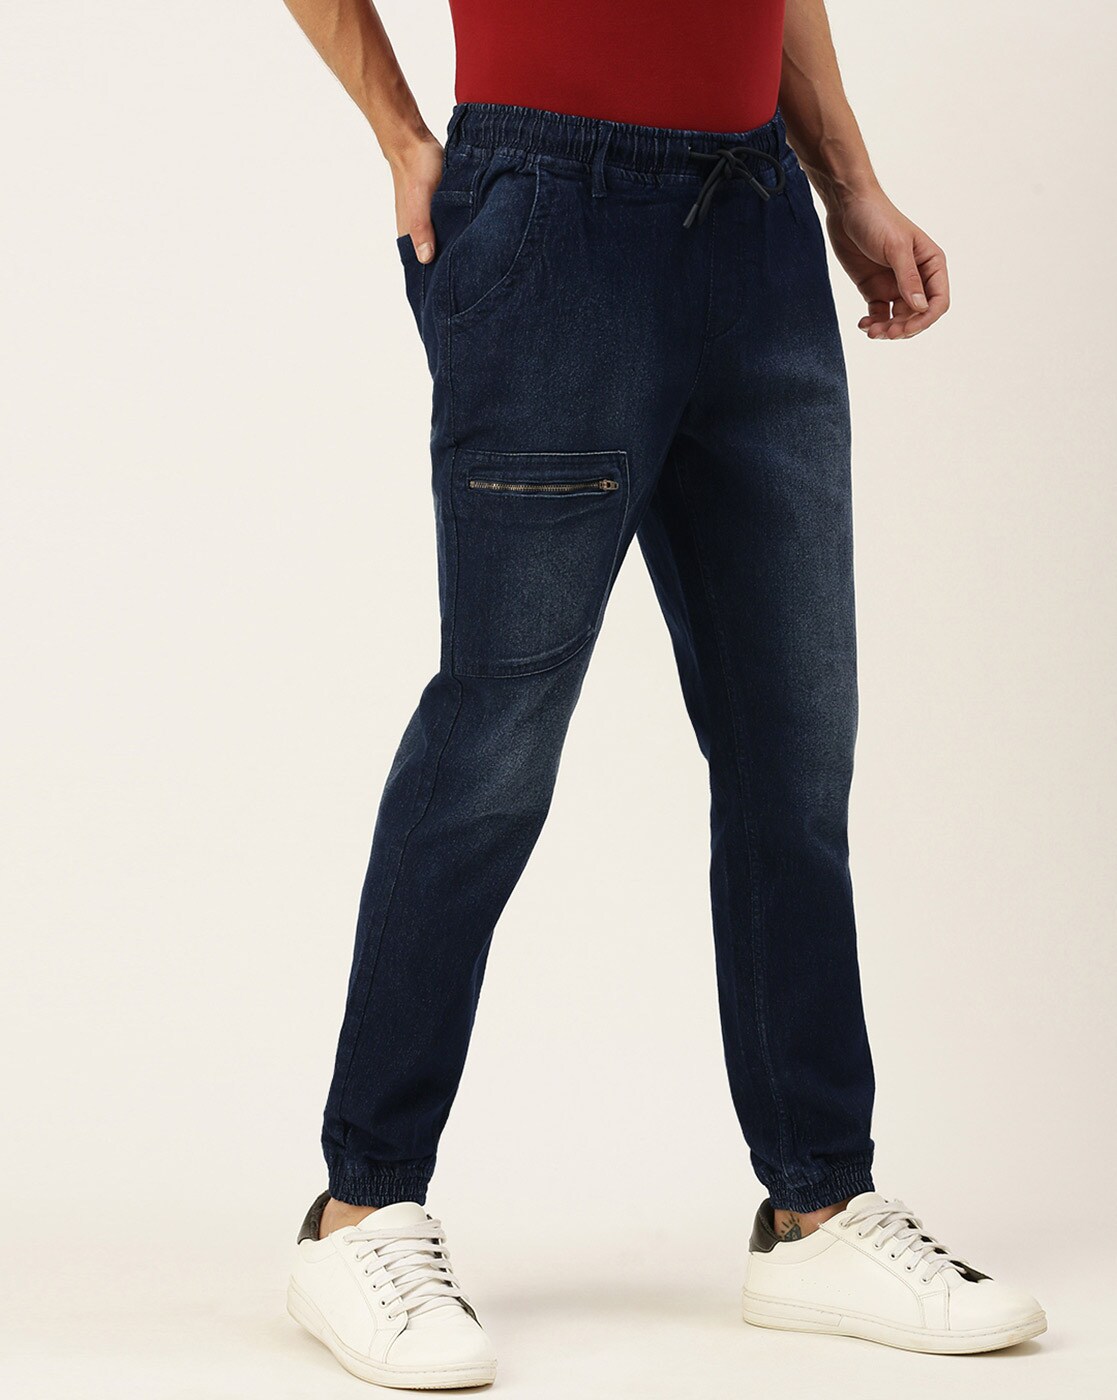 Levi's® Engineered Jeans™ Knit Jogger Pants - Grey | Levi's® US